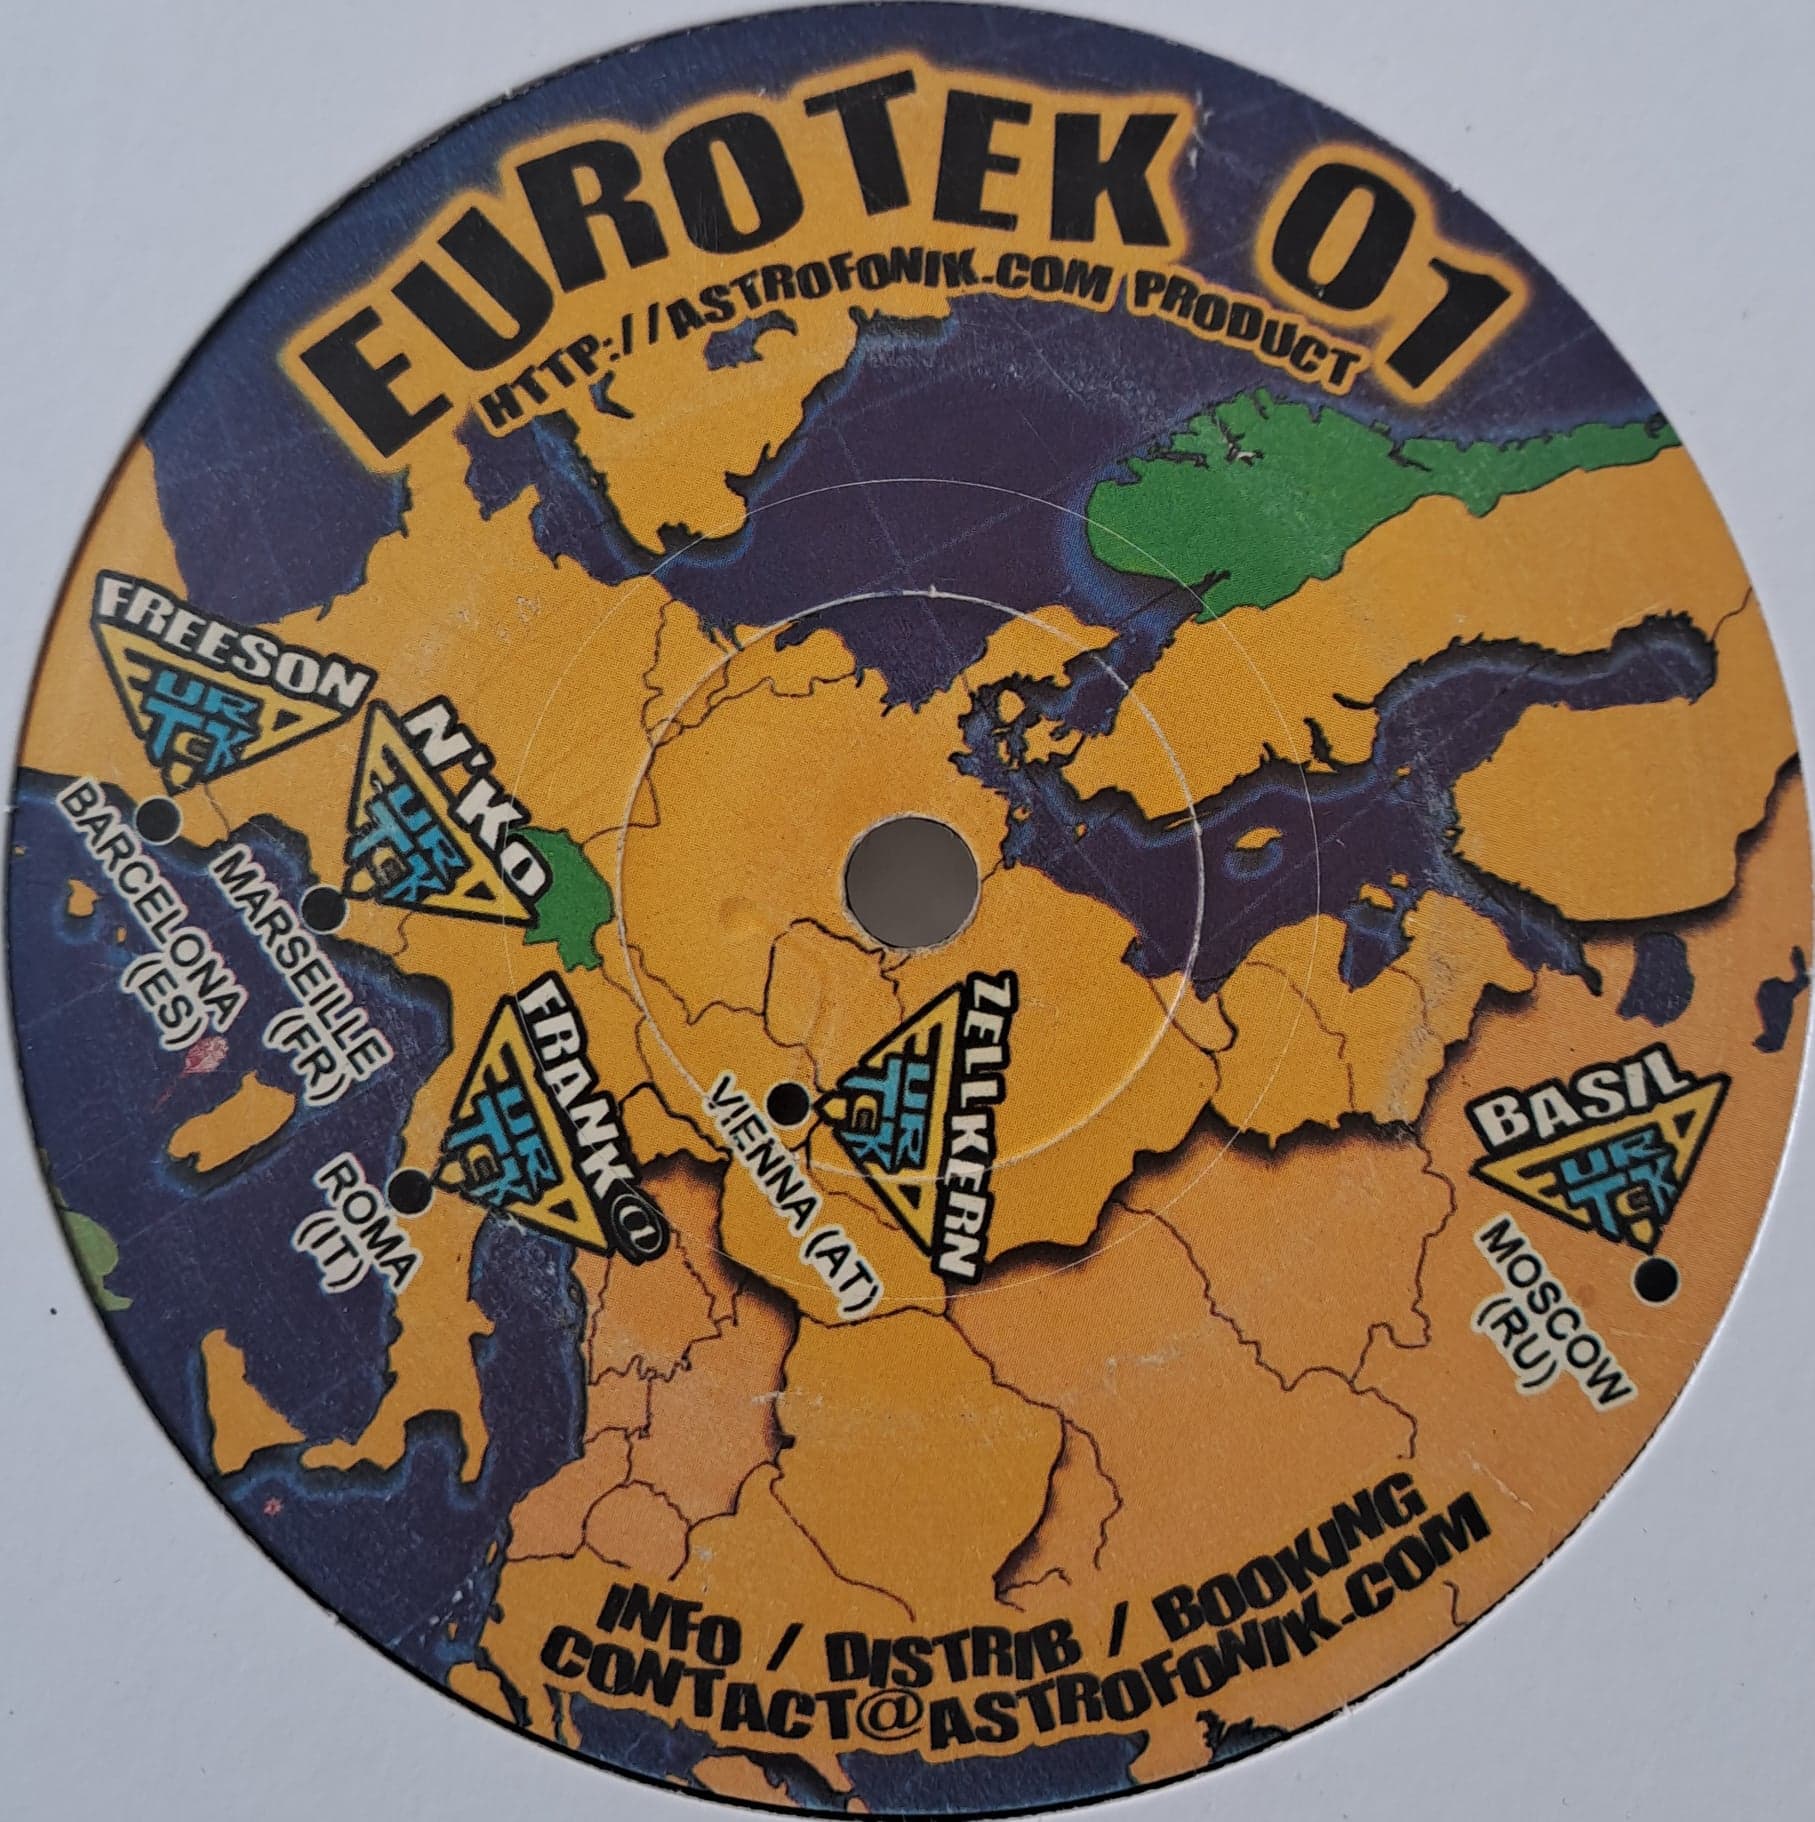 Eurotek 01 - vinyle tribecore